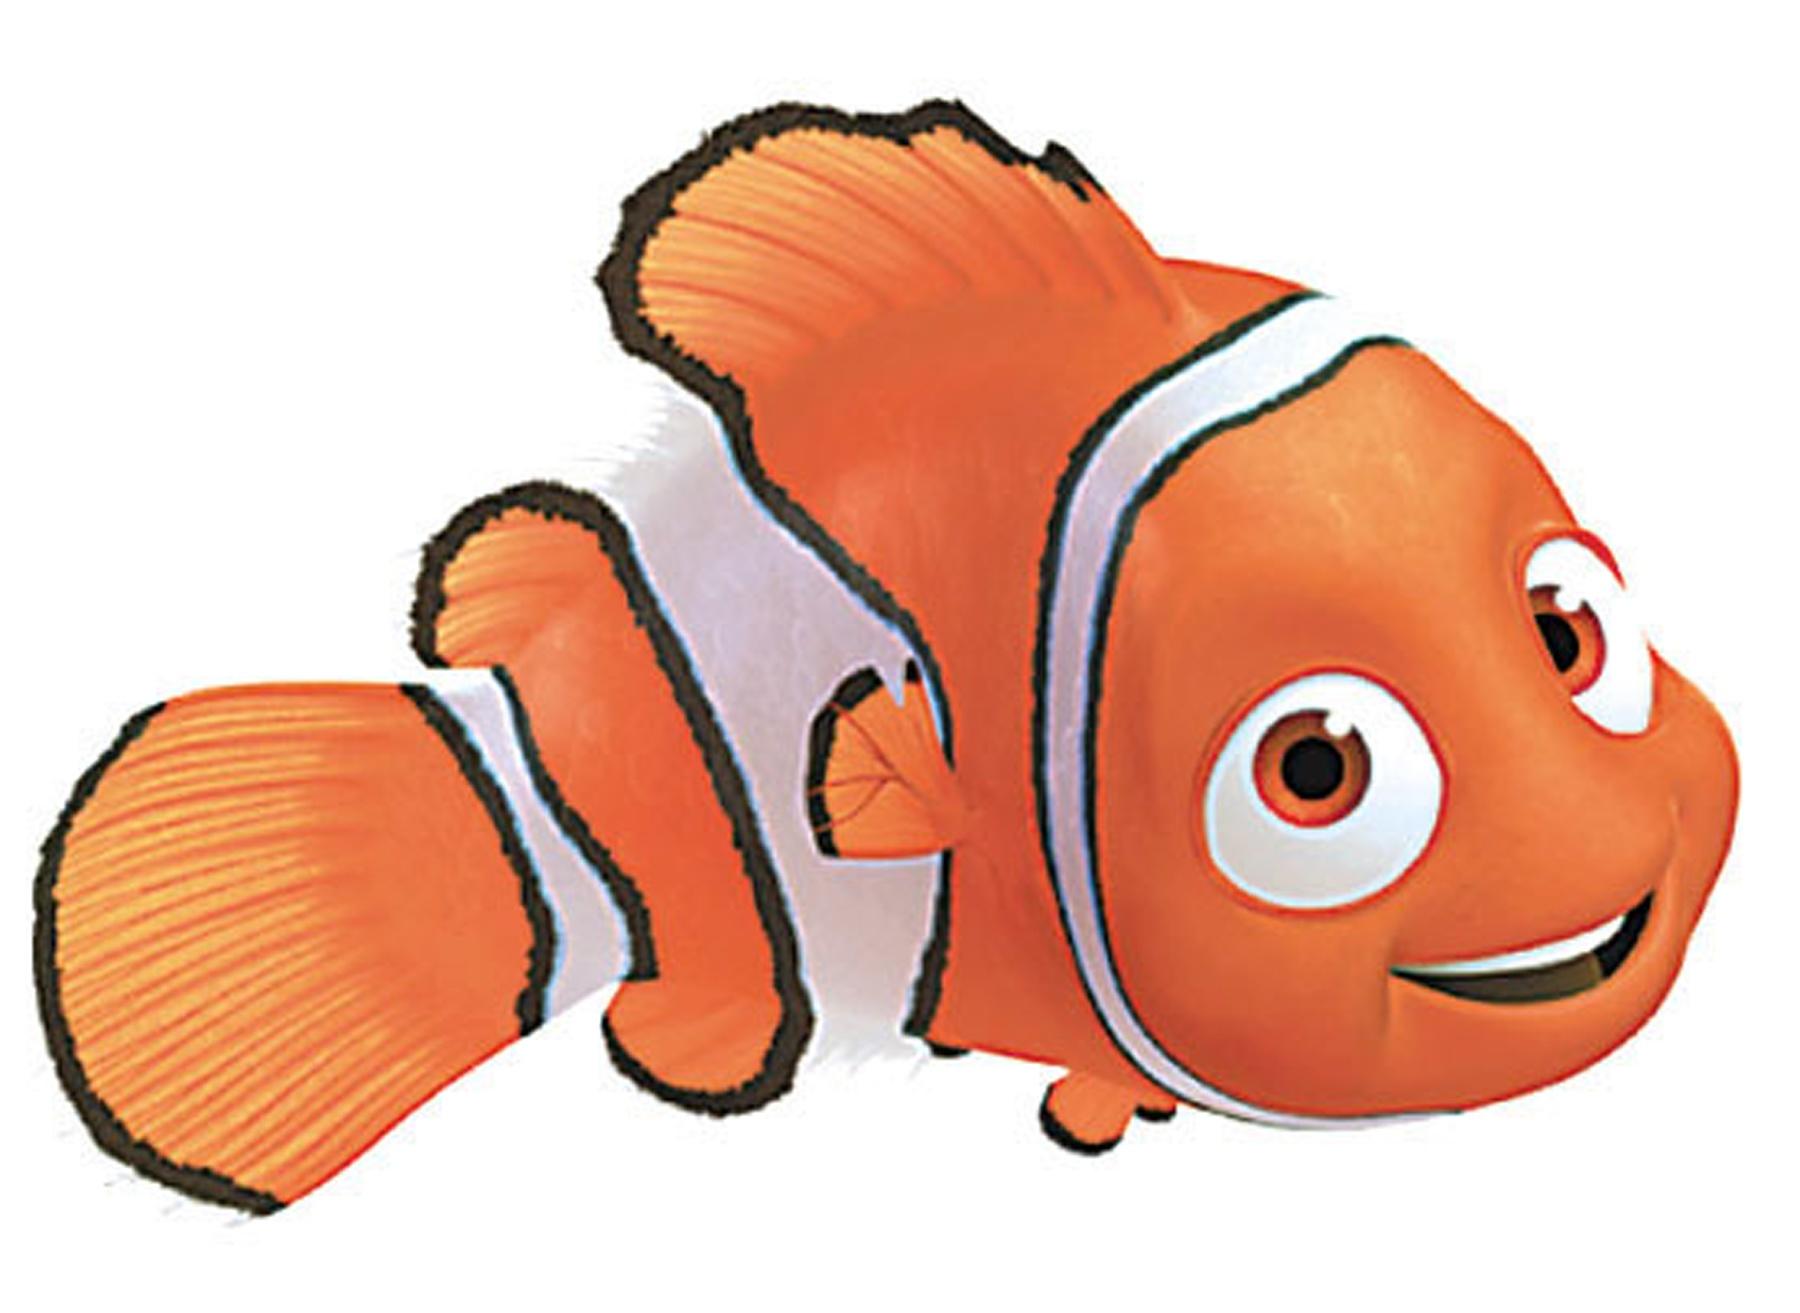 Cartoon Nemo Clipart